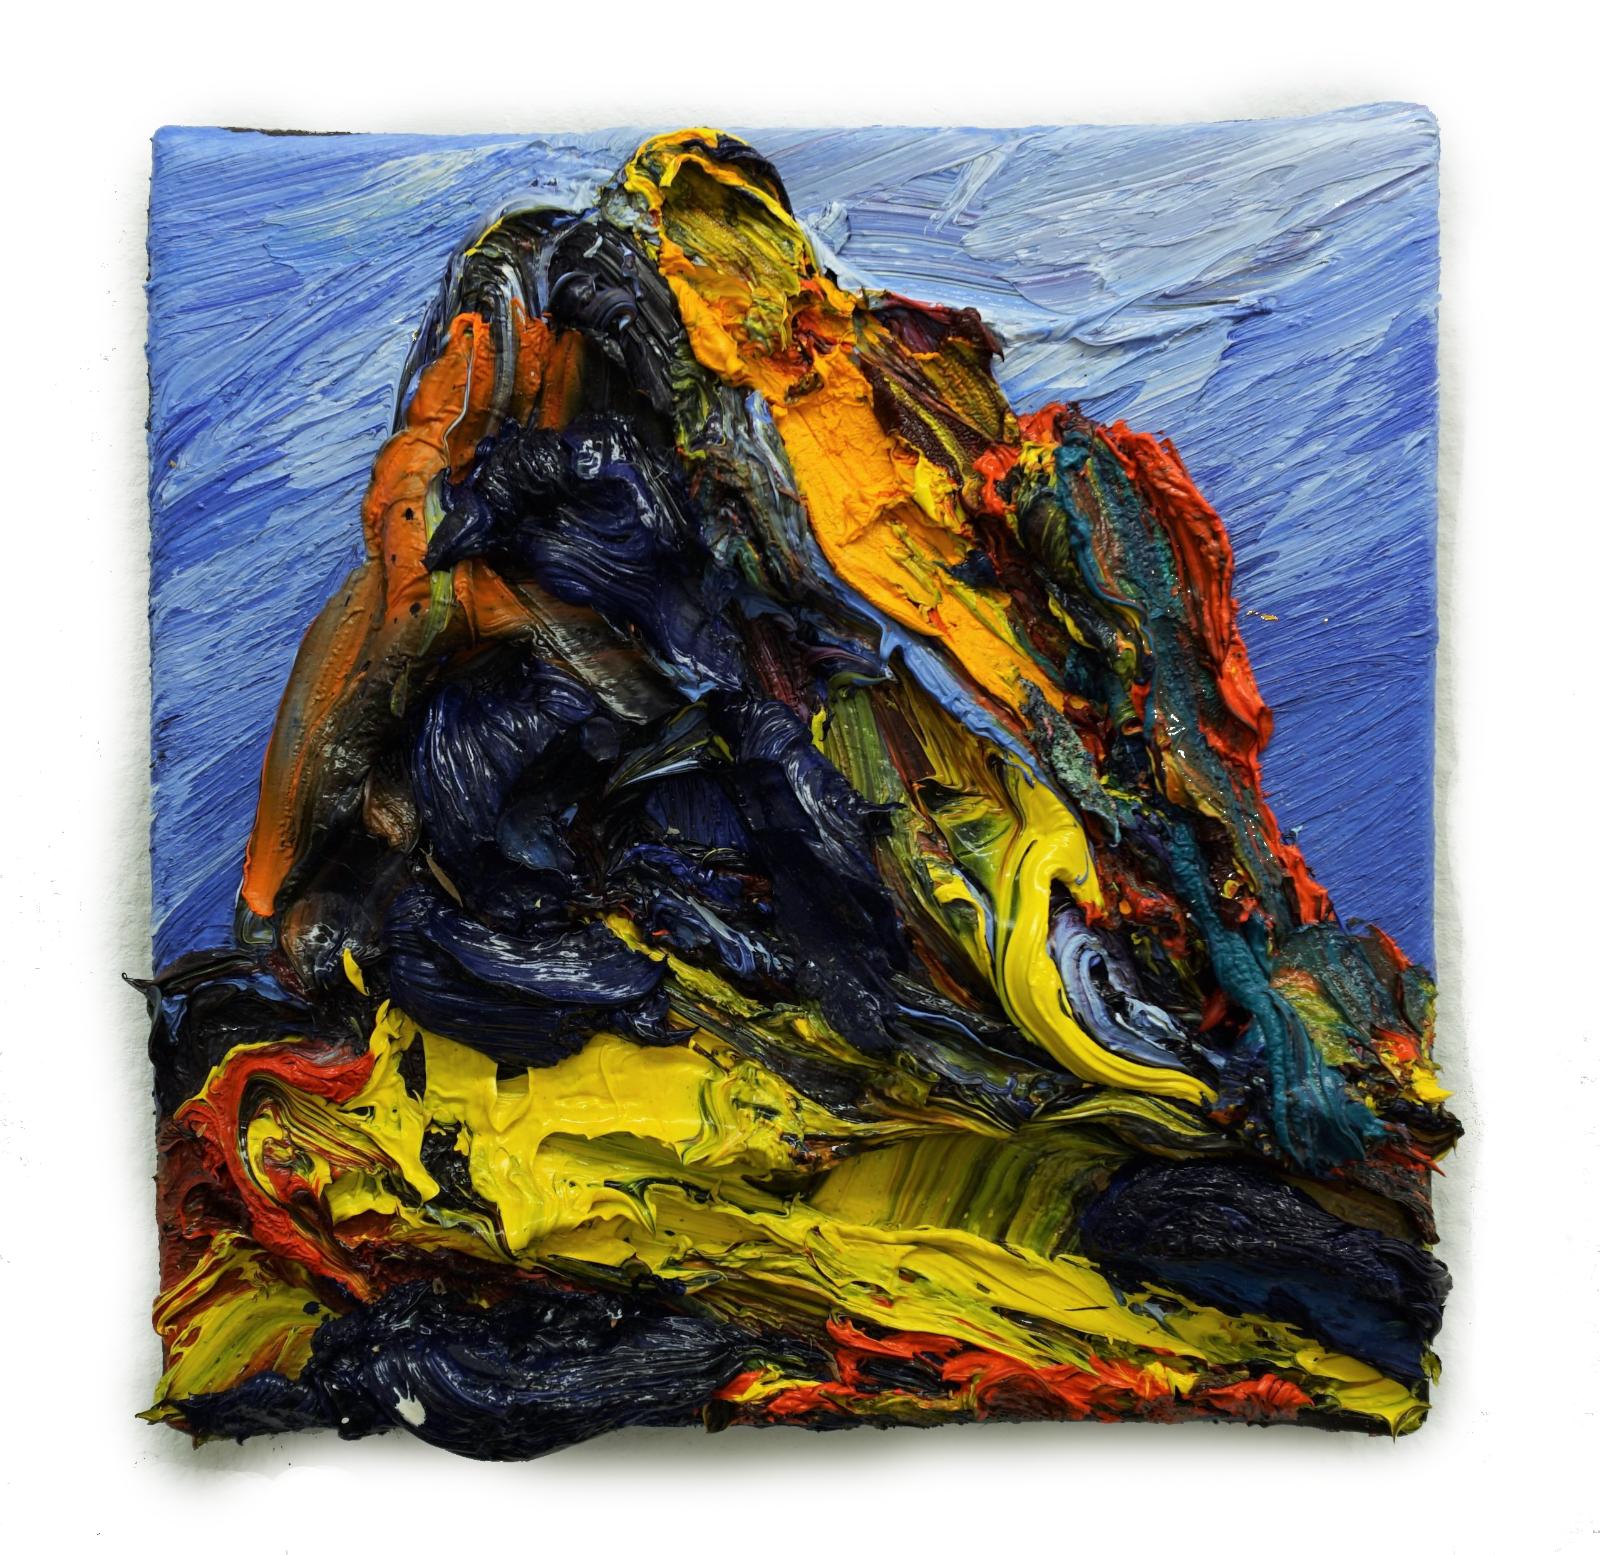 Harry Meyer, Gipfel, 2020, Öl auf Leinwand, 20 x 20 cm,meh009ko